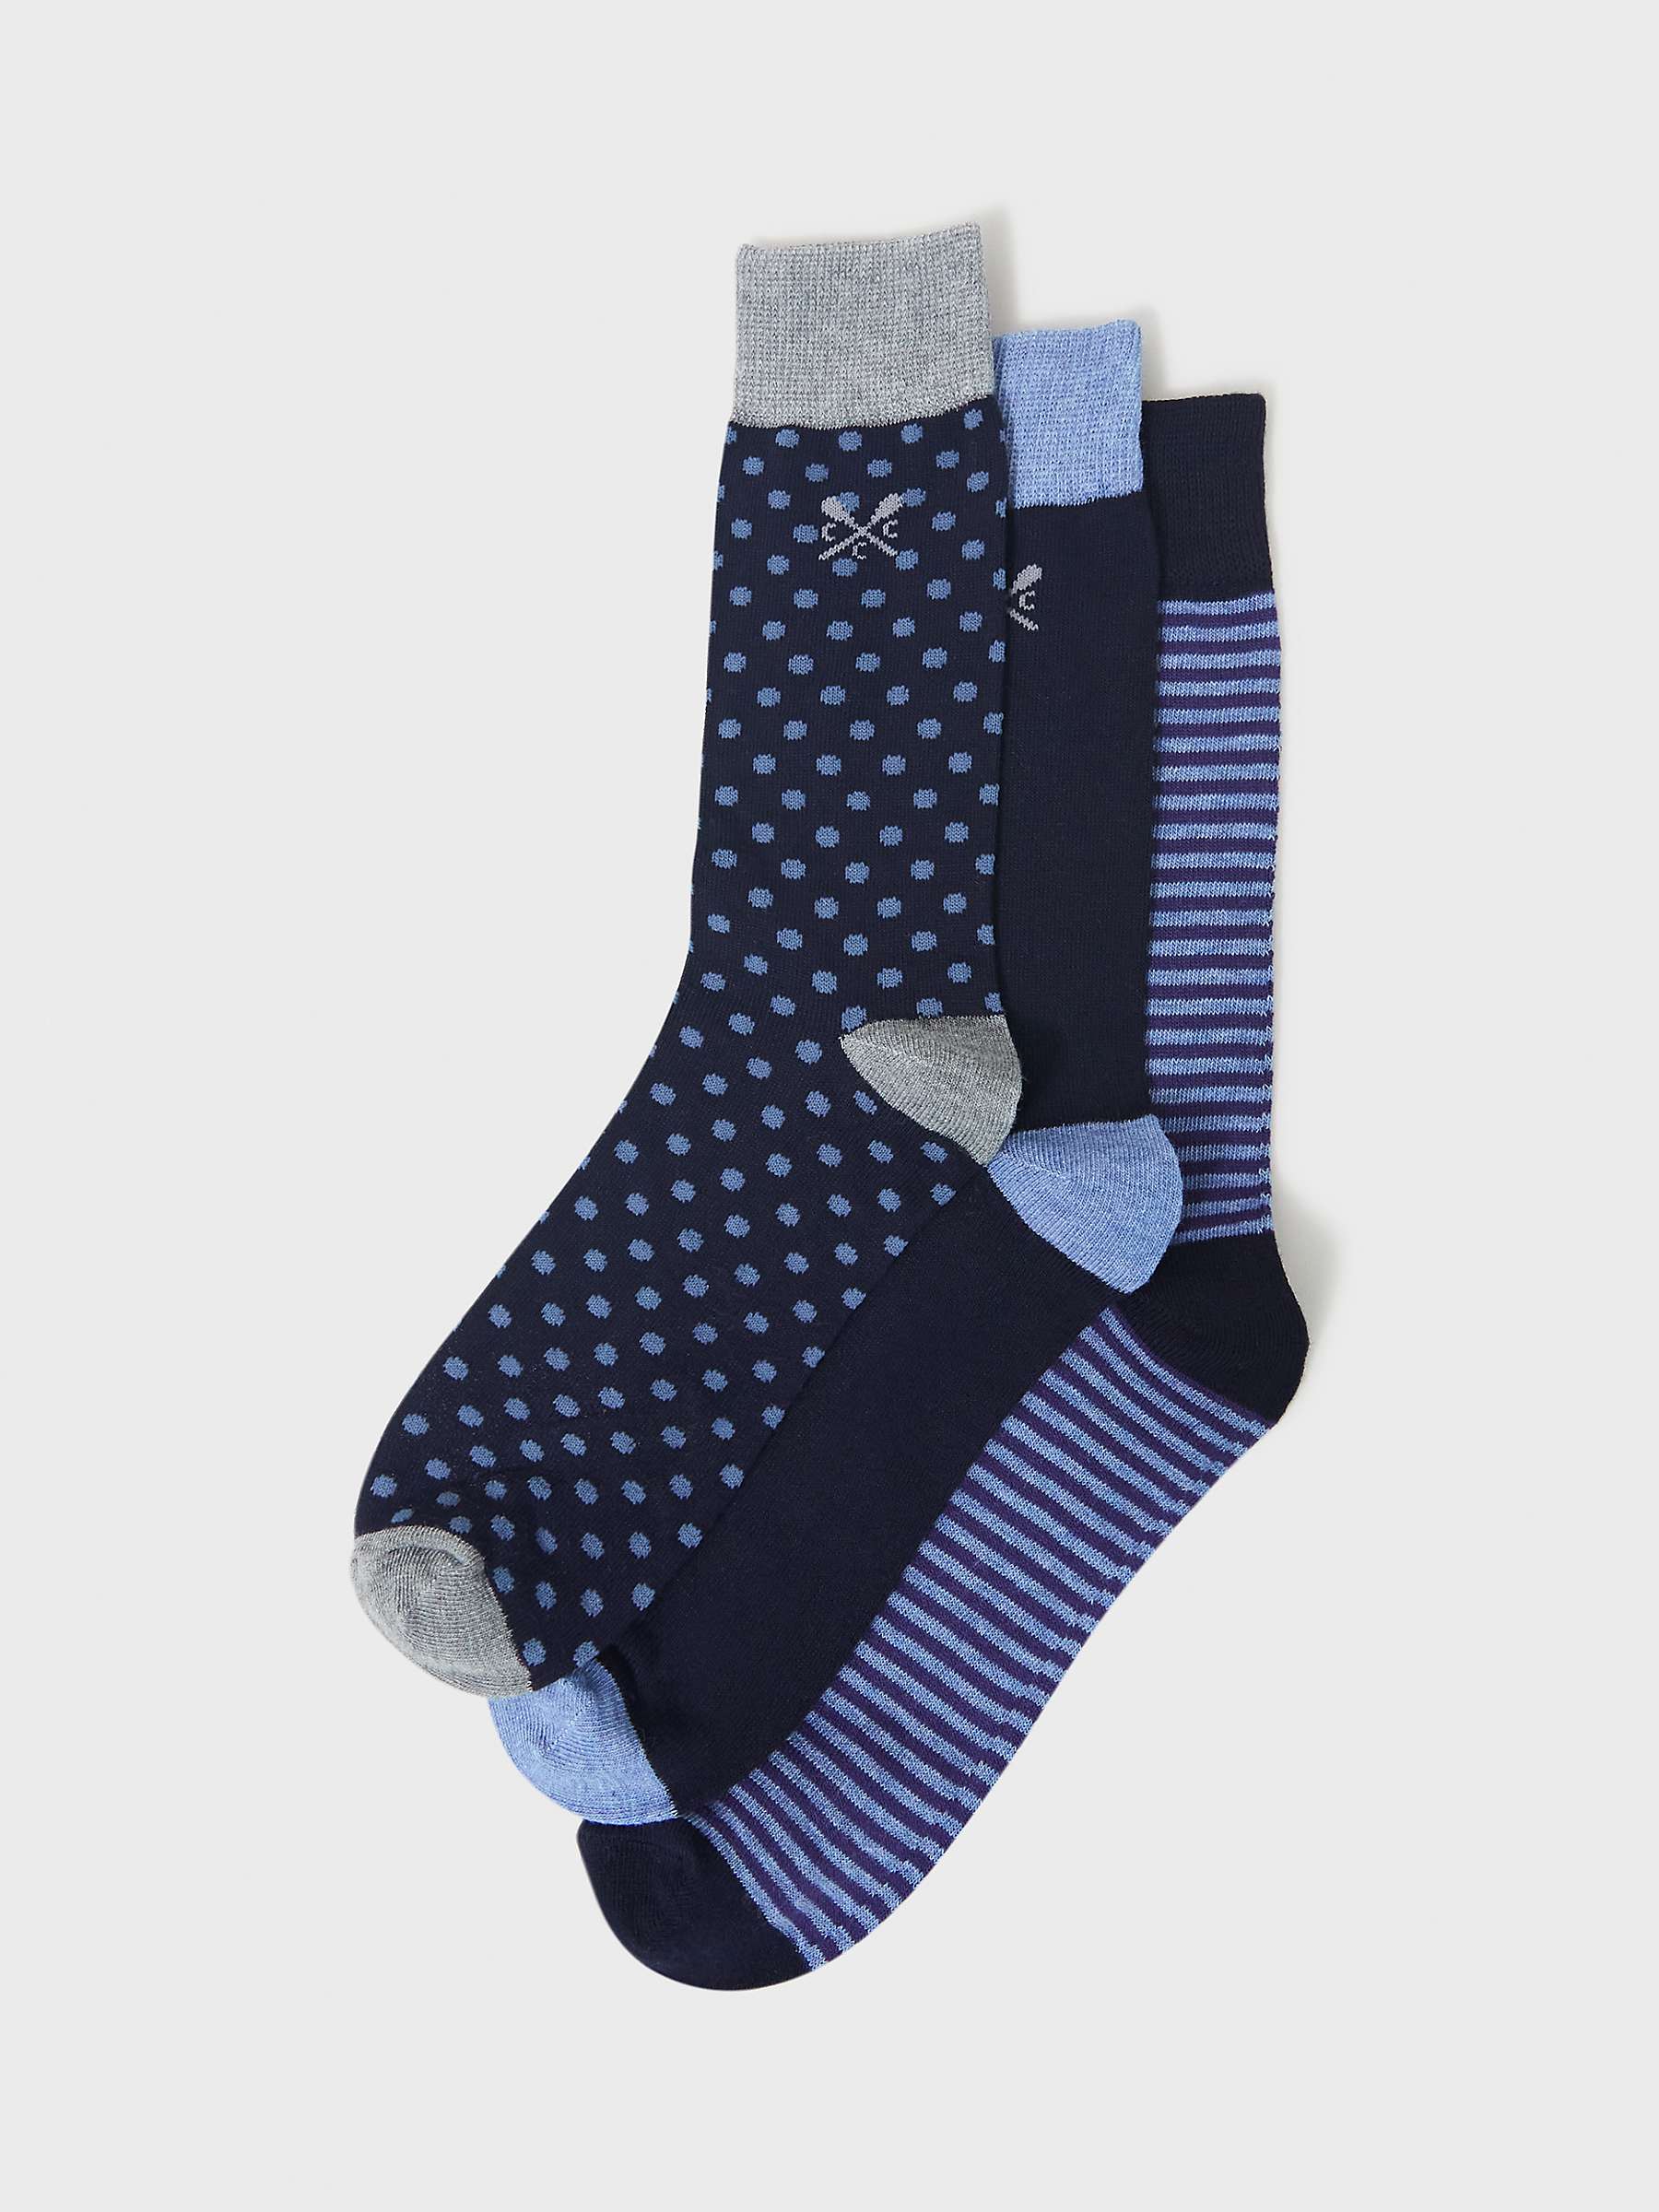 Buy Crew Clothing Bamboo Blend Socks, Pack of 3, Navy Blue Online at johnlewis.com